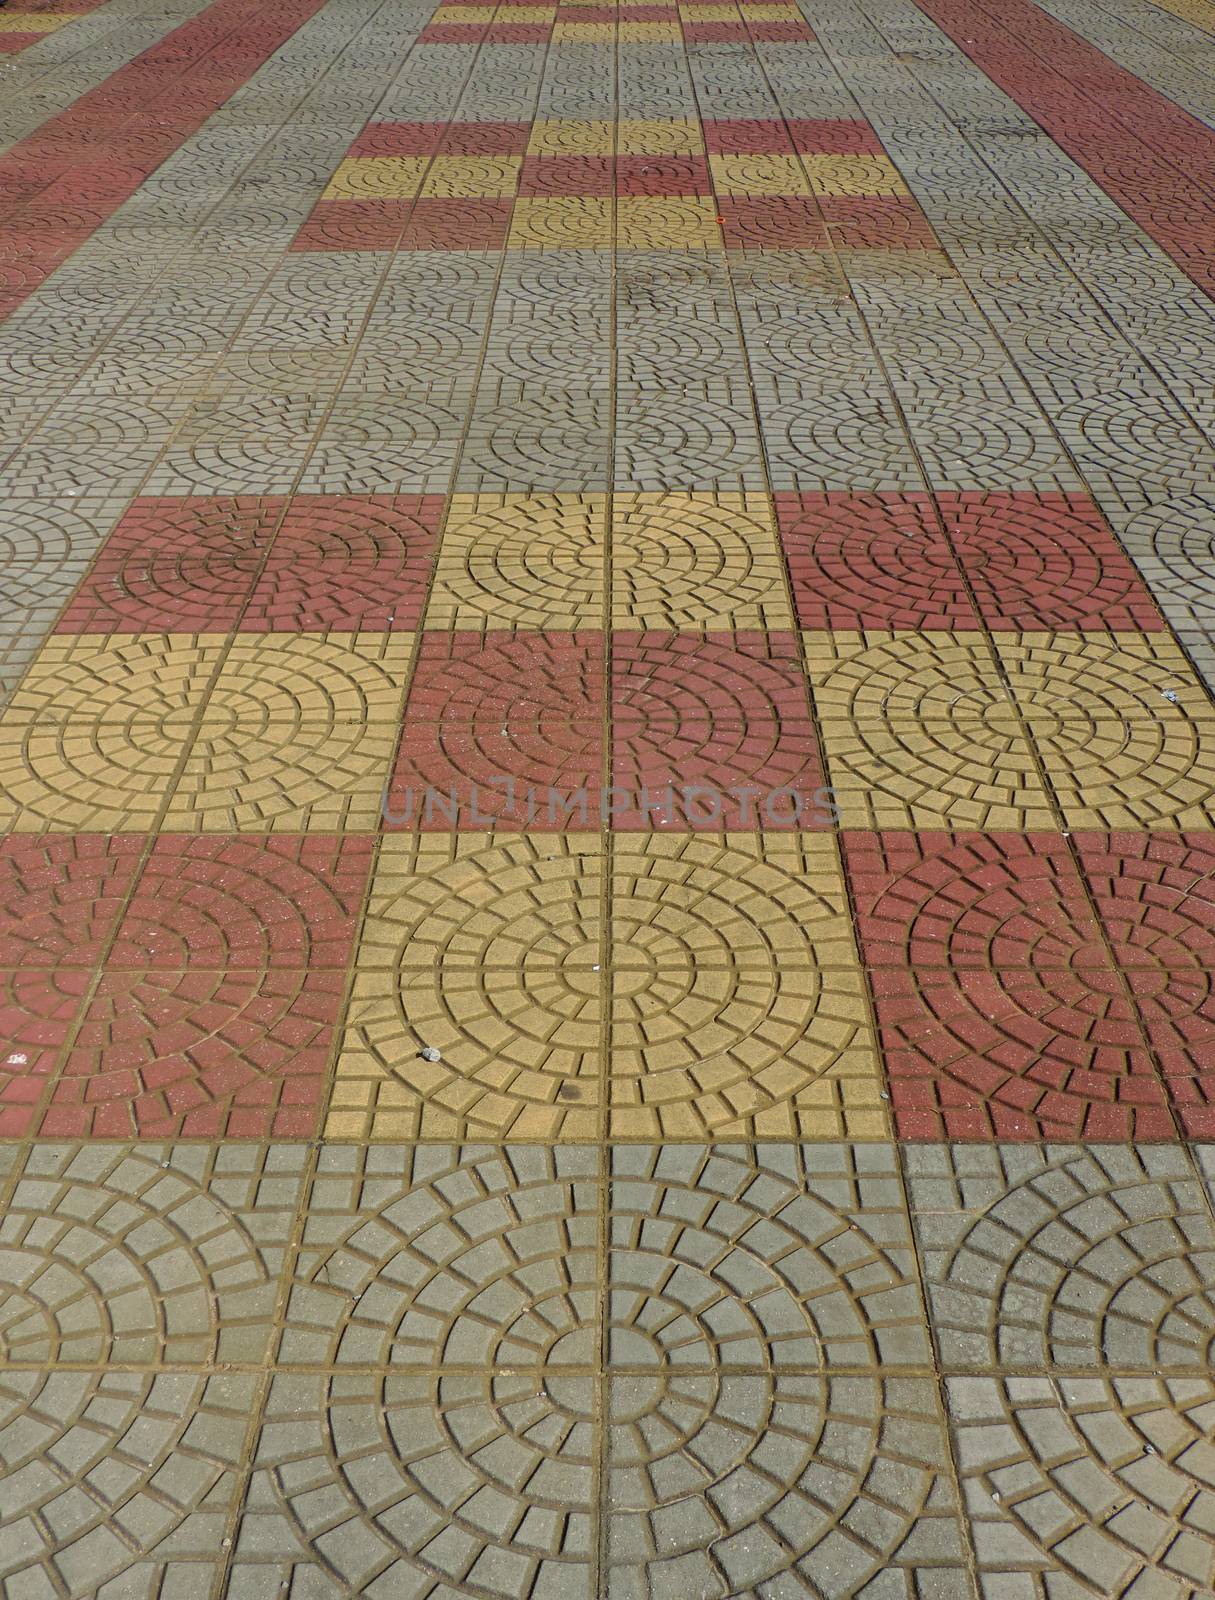 Tiled mosaic concrete pavement by luisrftc